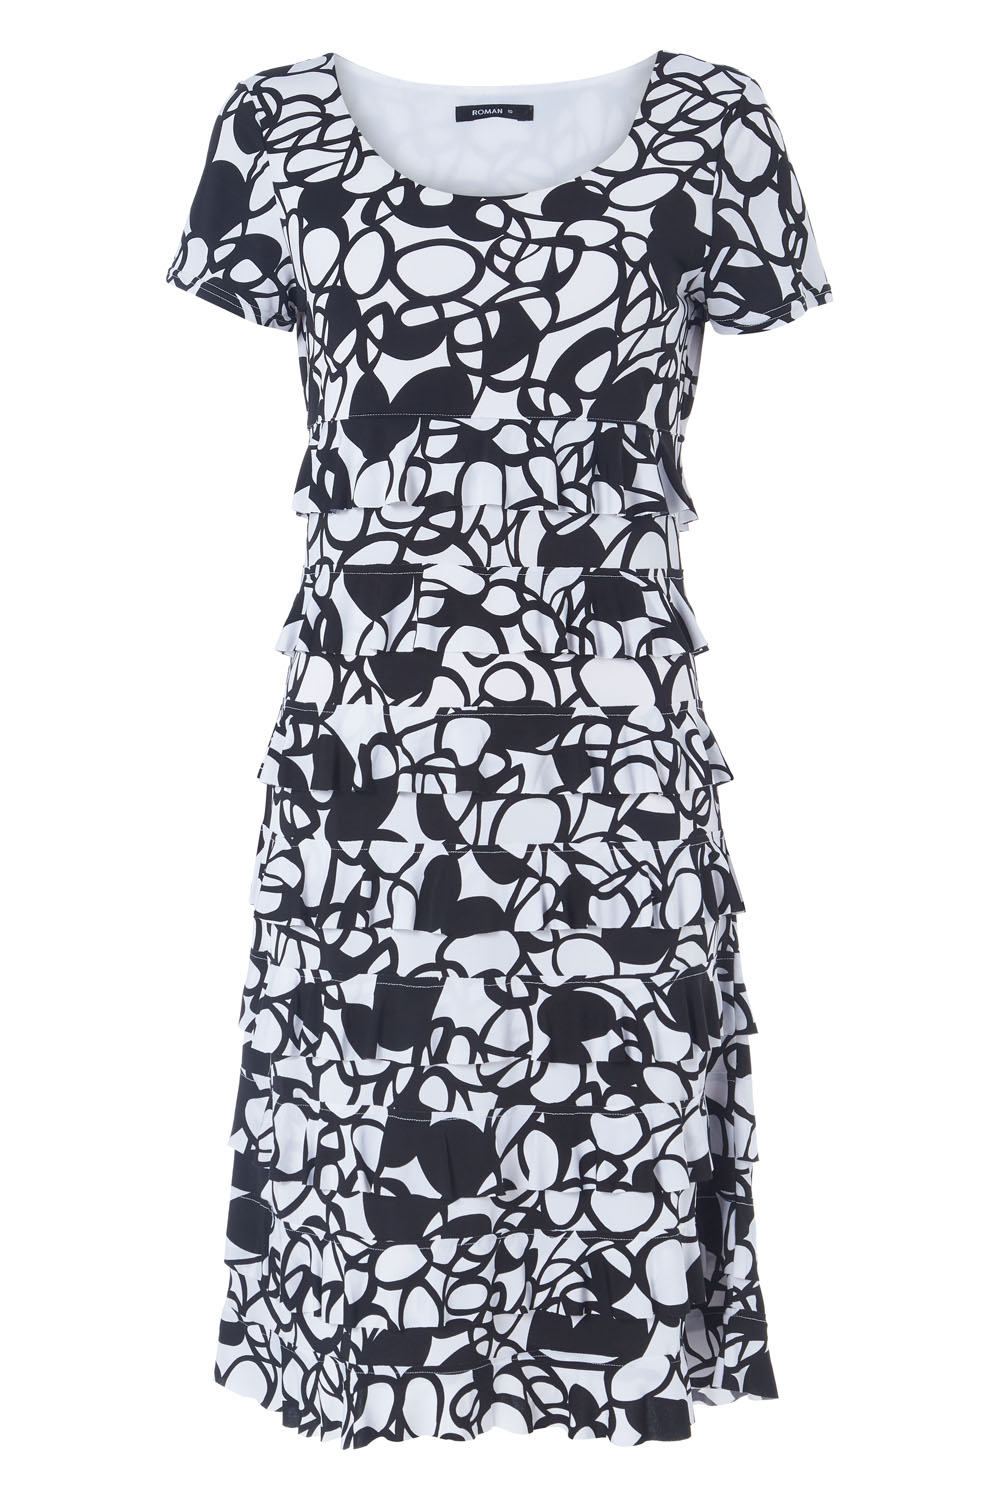 Black Monochrome Print Frill Tiered Dress, Image 4 of 4